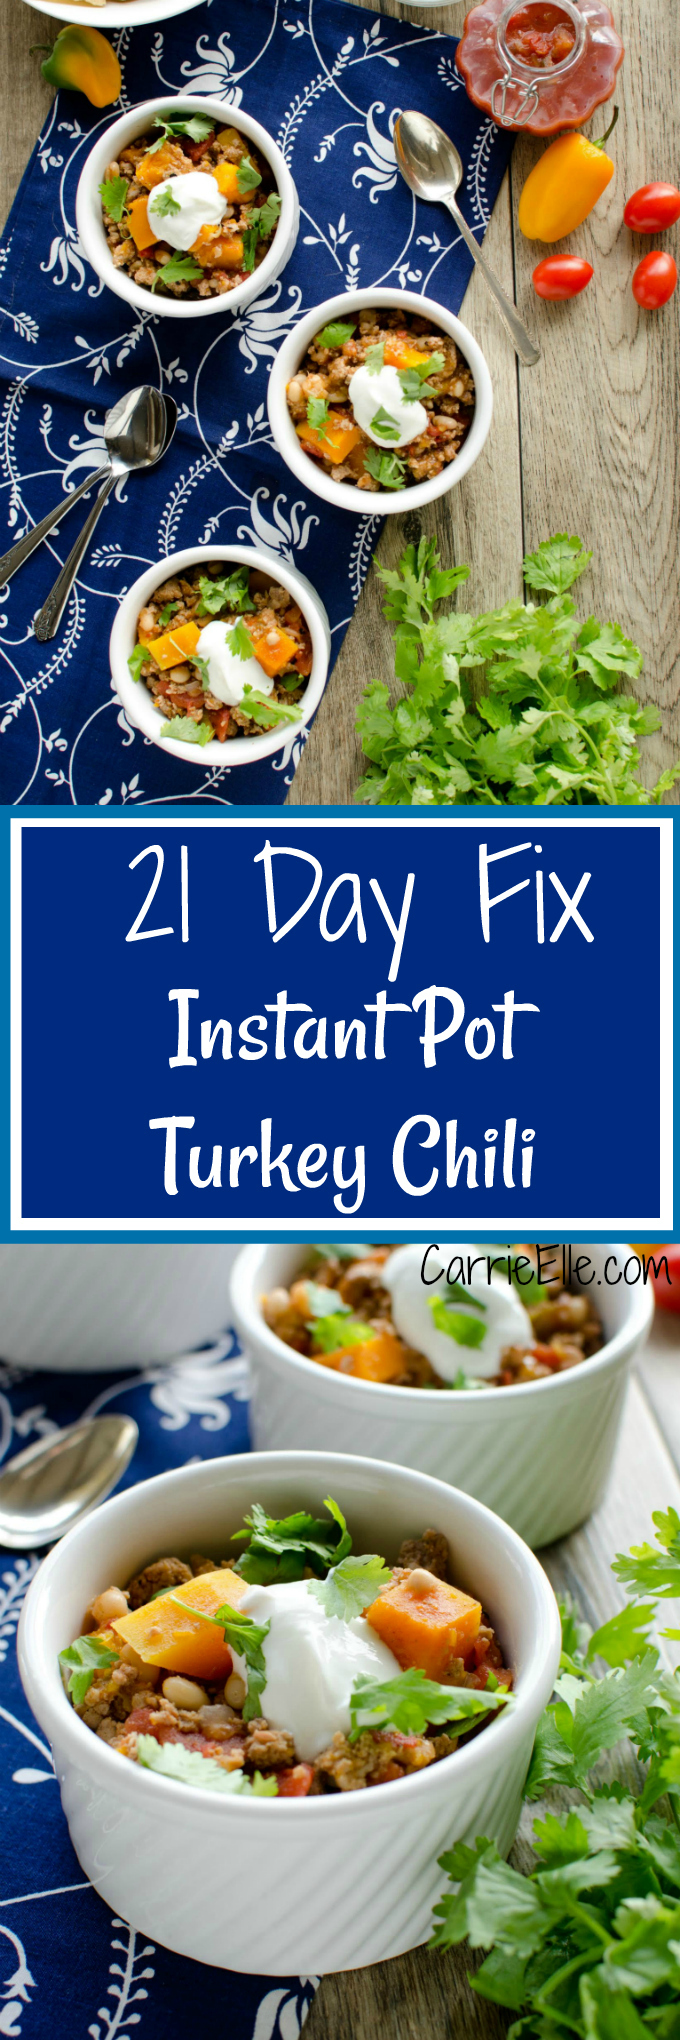 21 Day Fix Instant Pot Chili